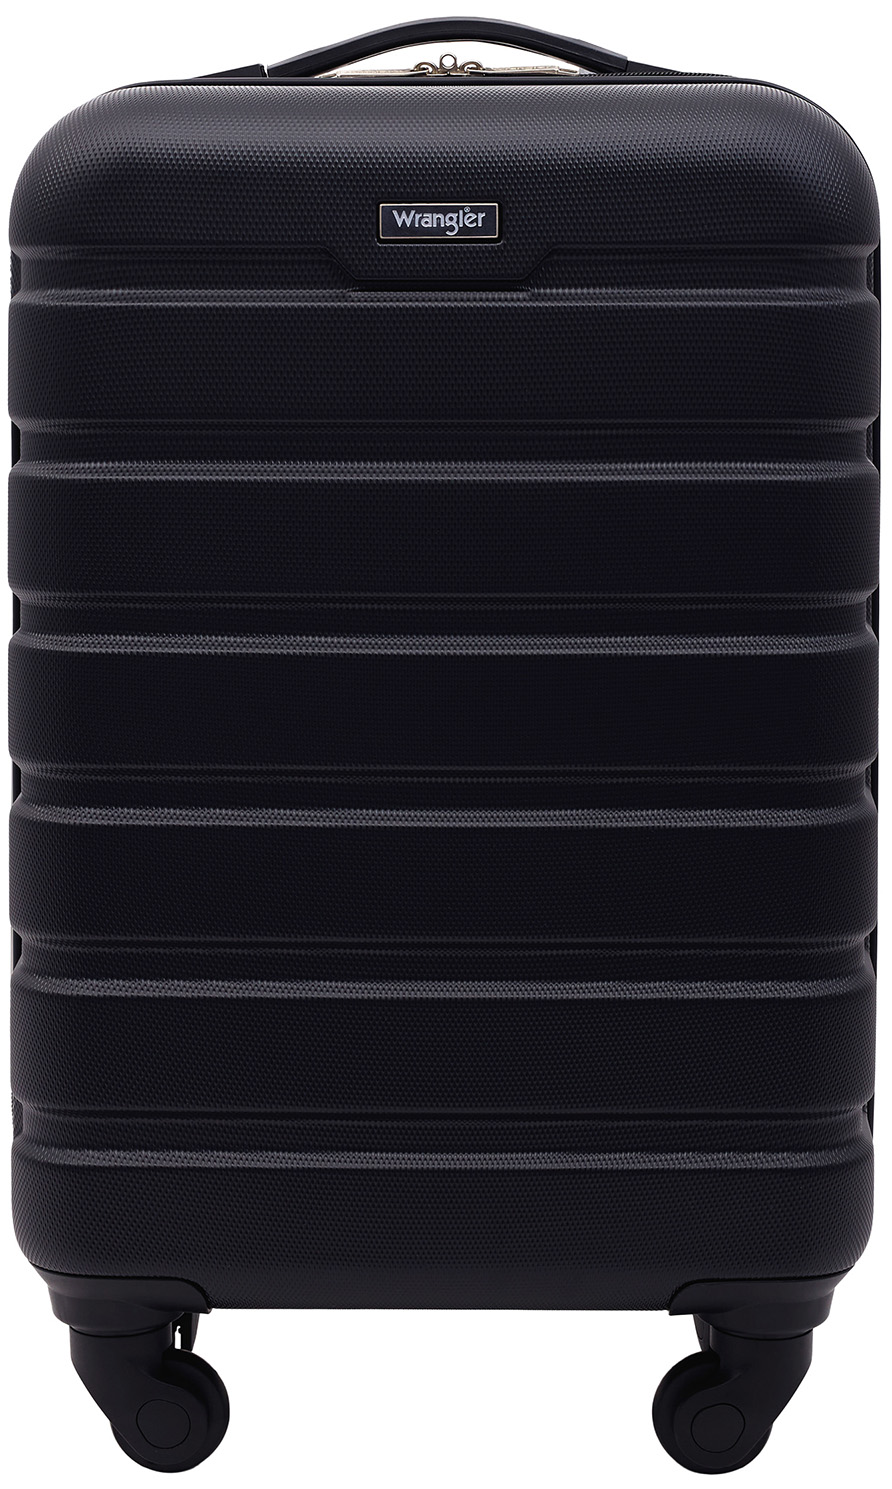 Wrangler 20” Carry-on Rolling Hardside Spinner Luggage Black - image 1 of 8